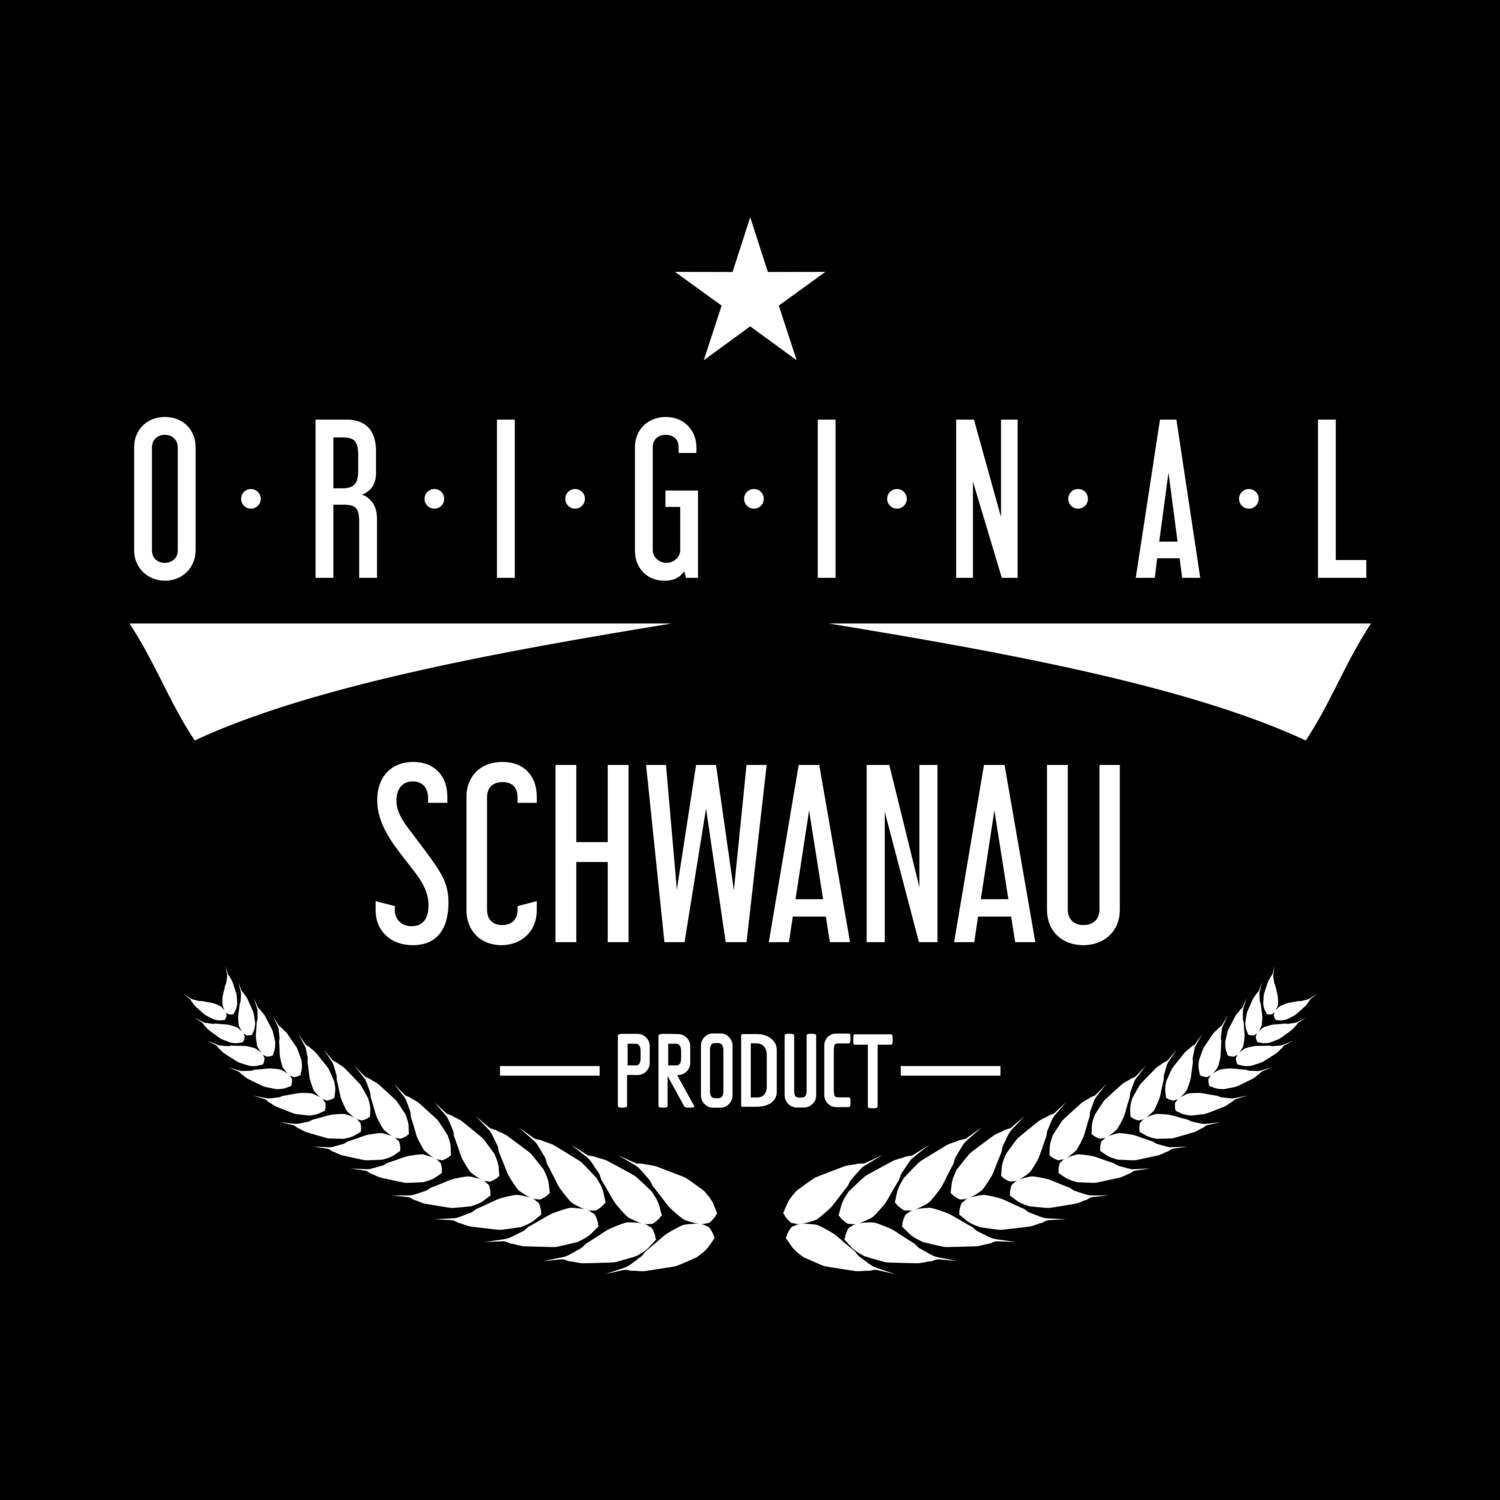 Schwanau T-Shirt »Original Product«